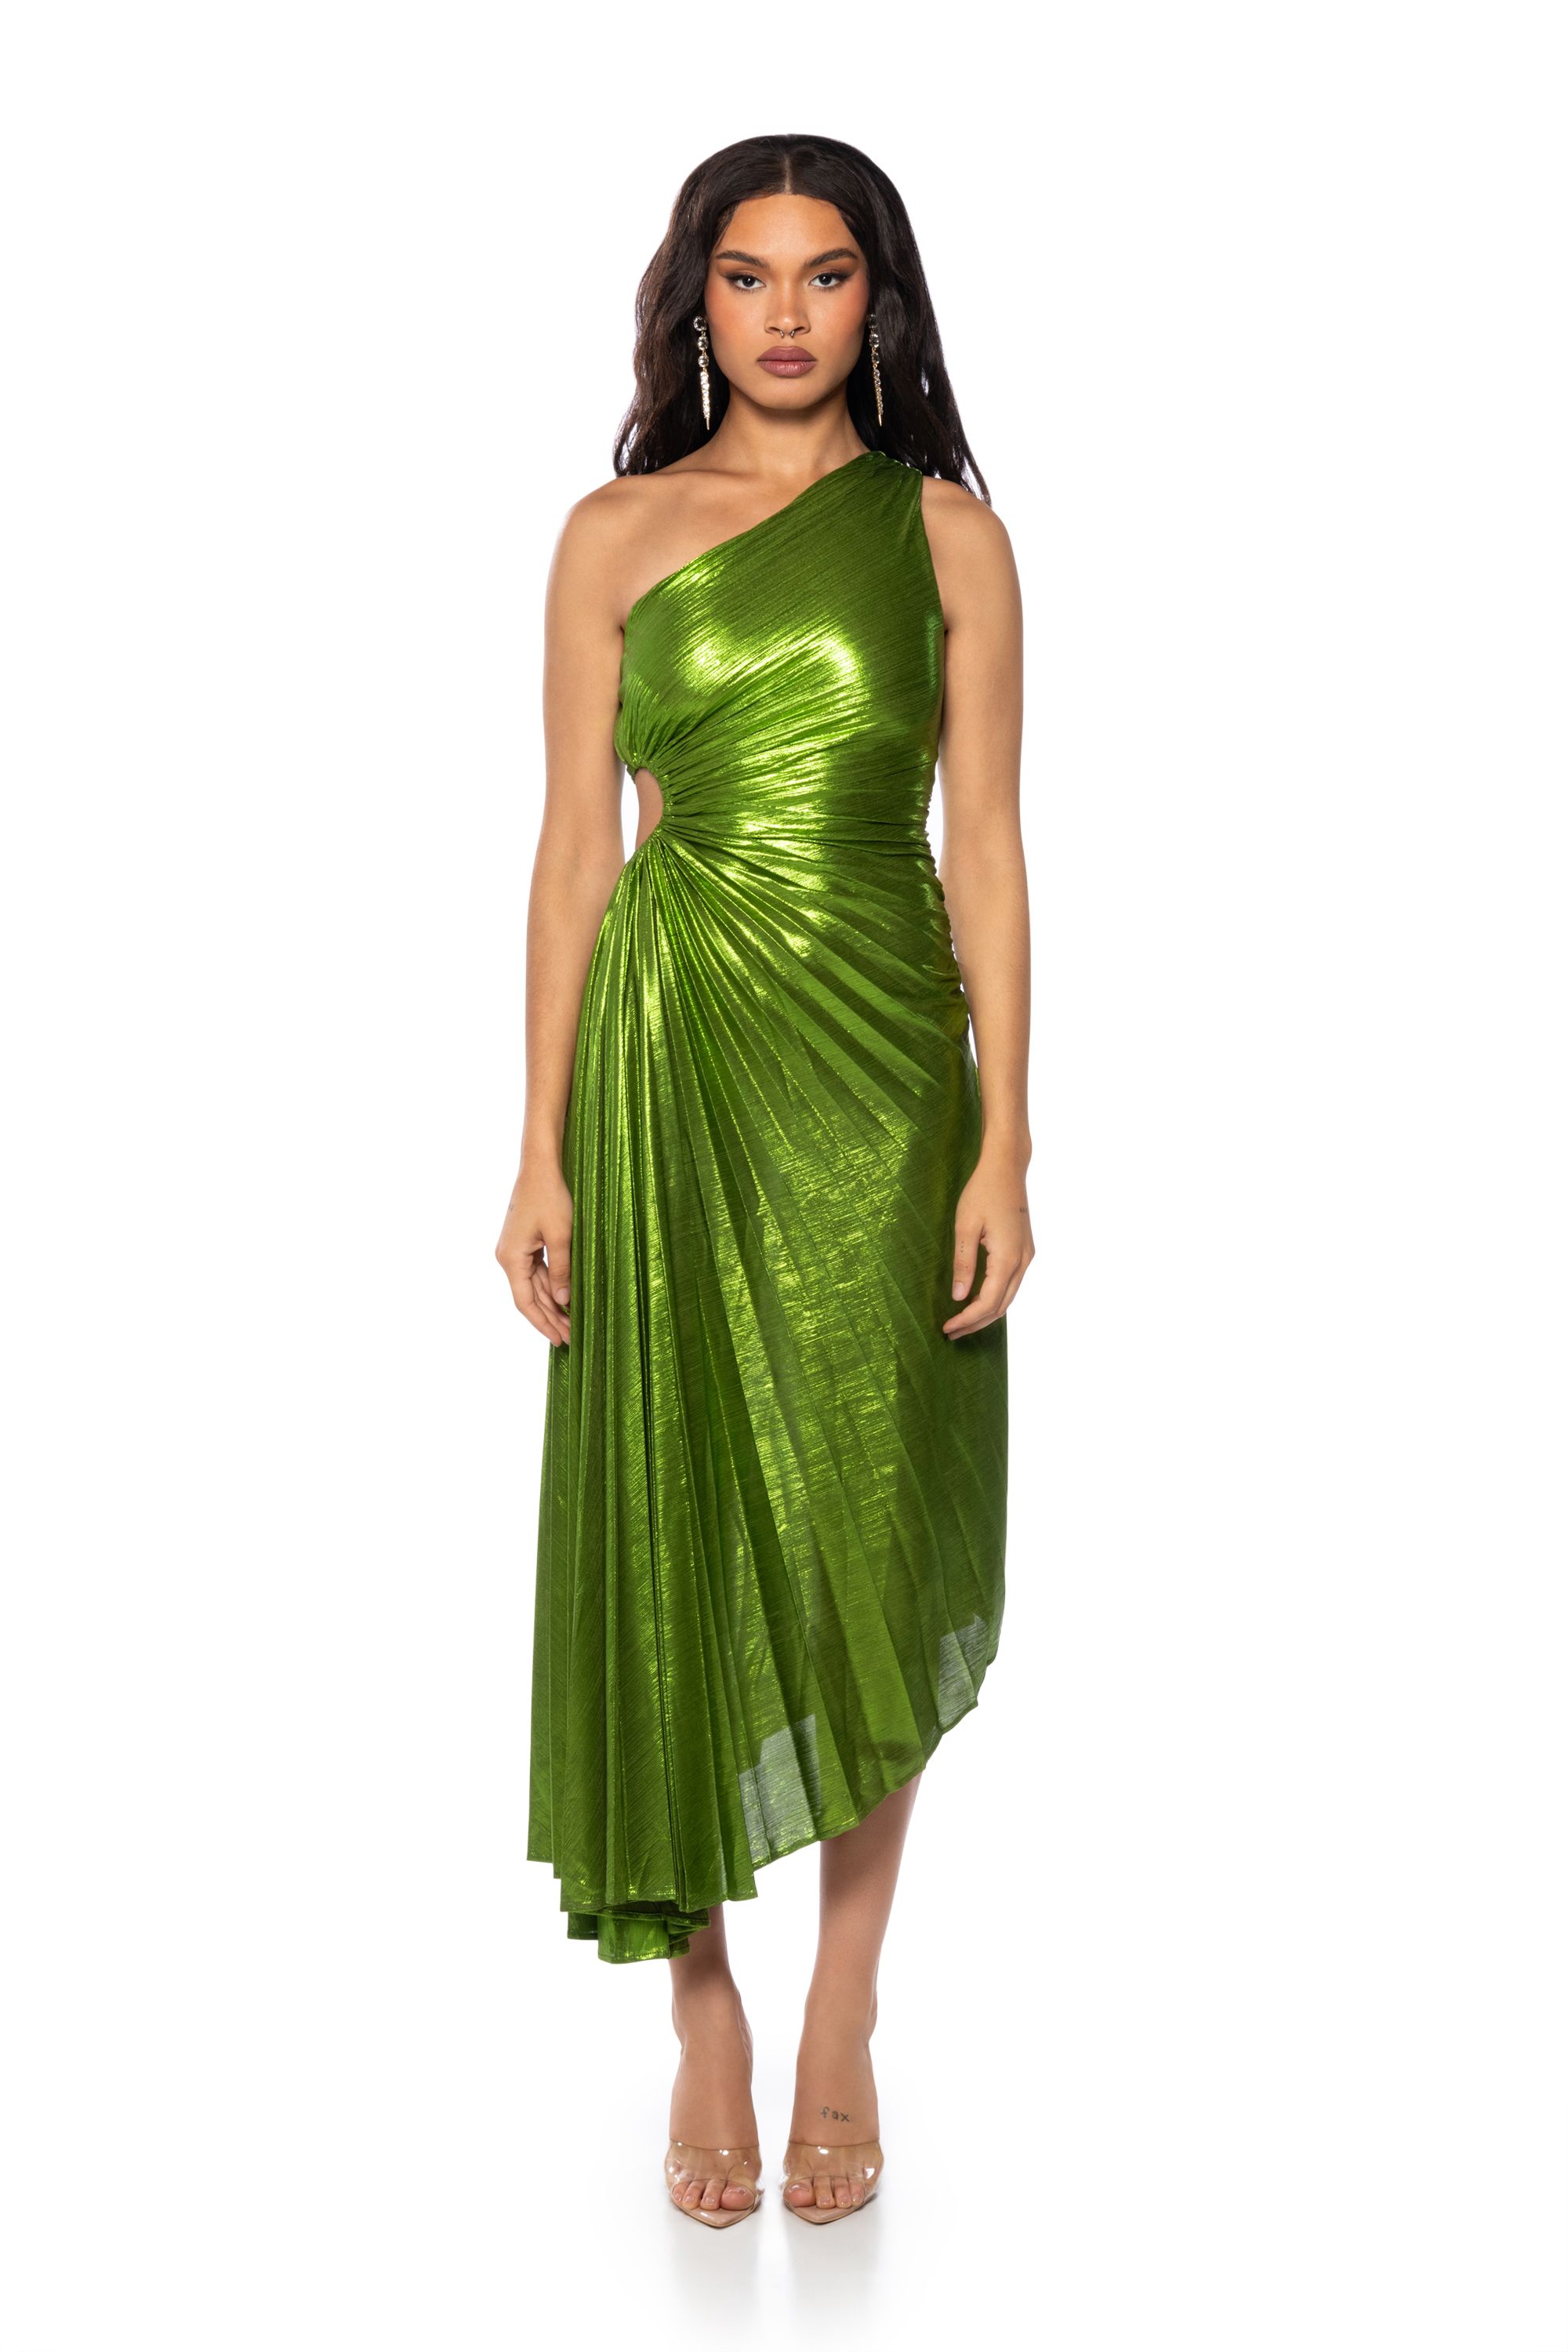 metallic green dress